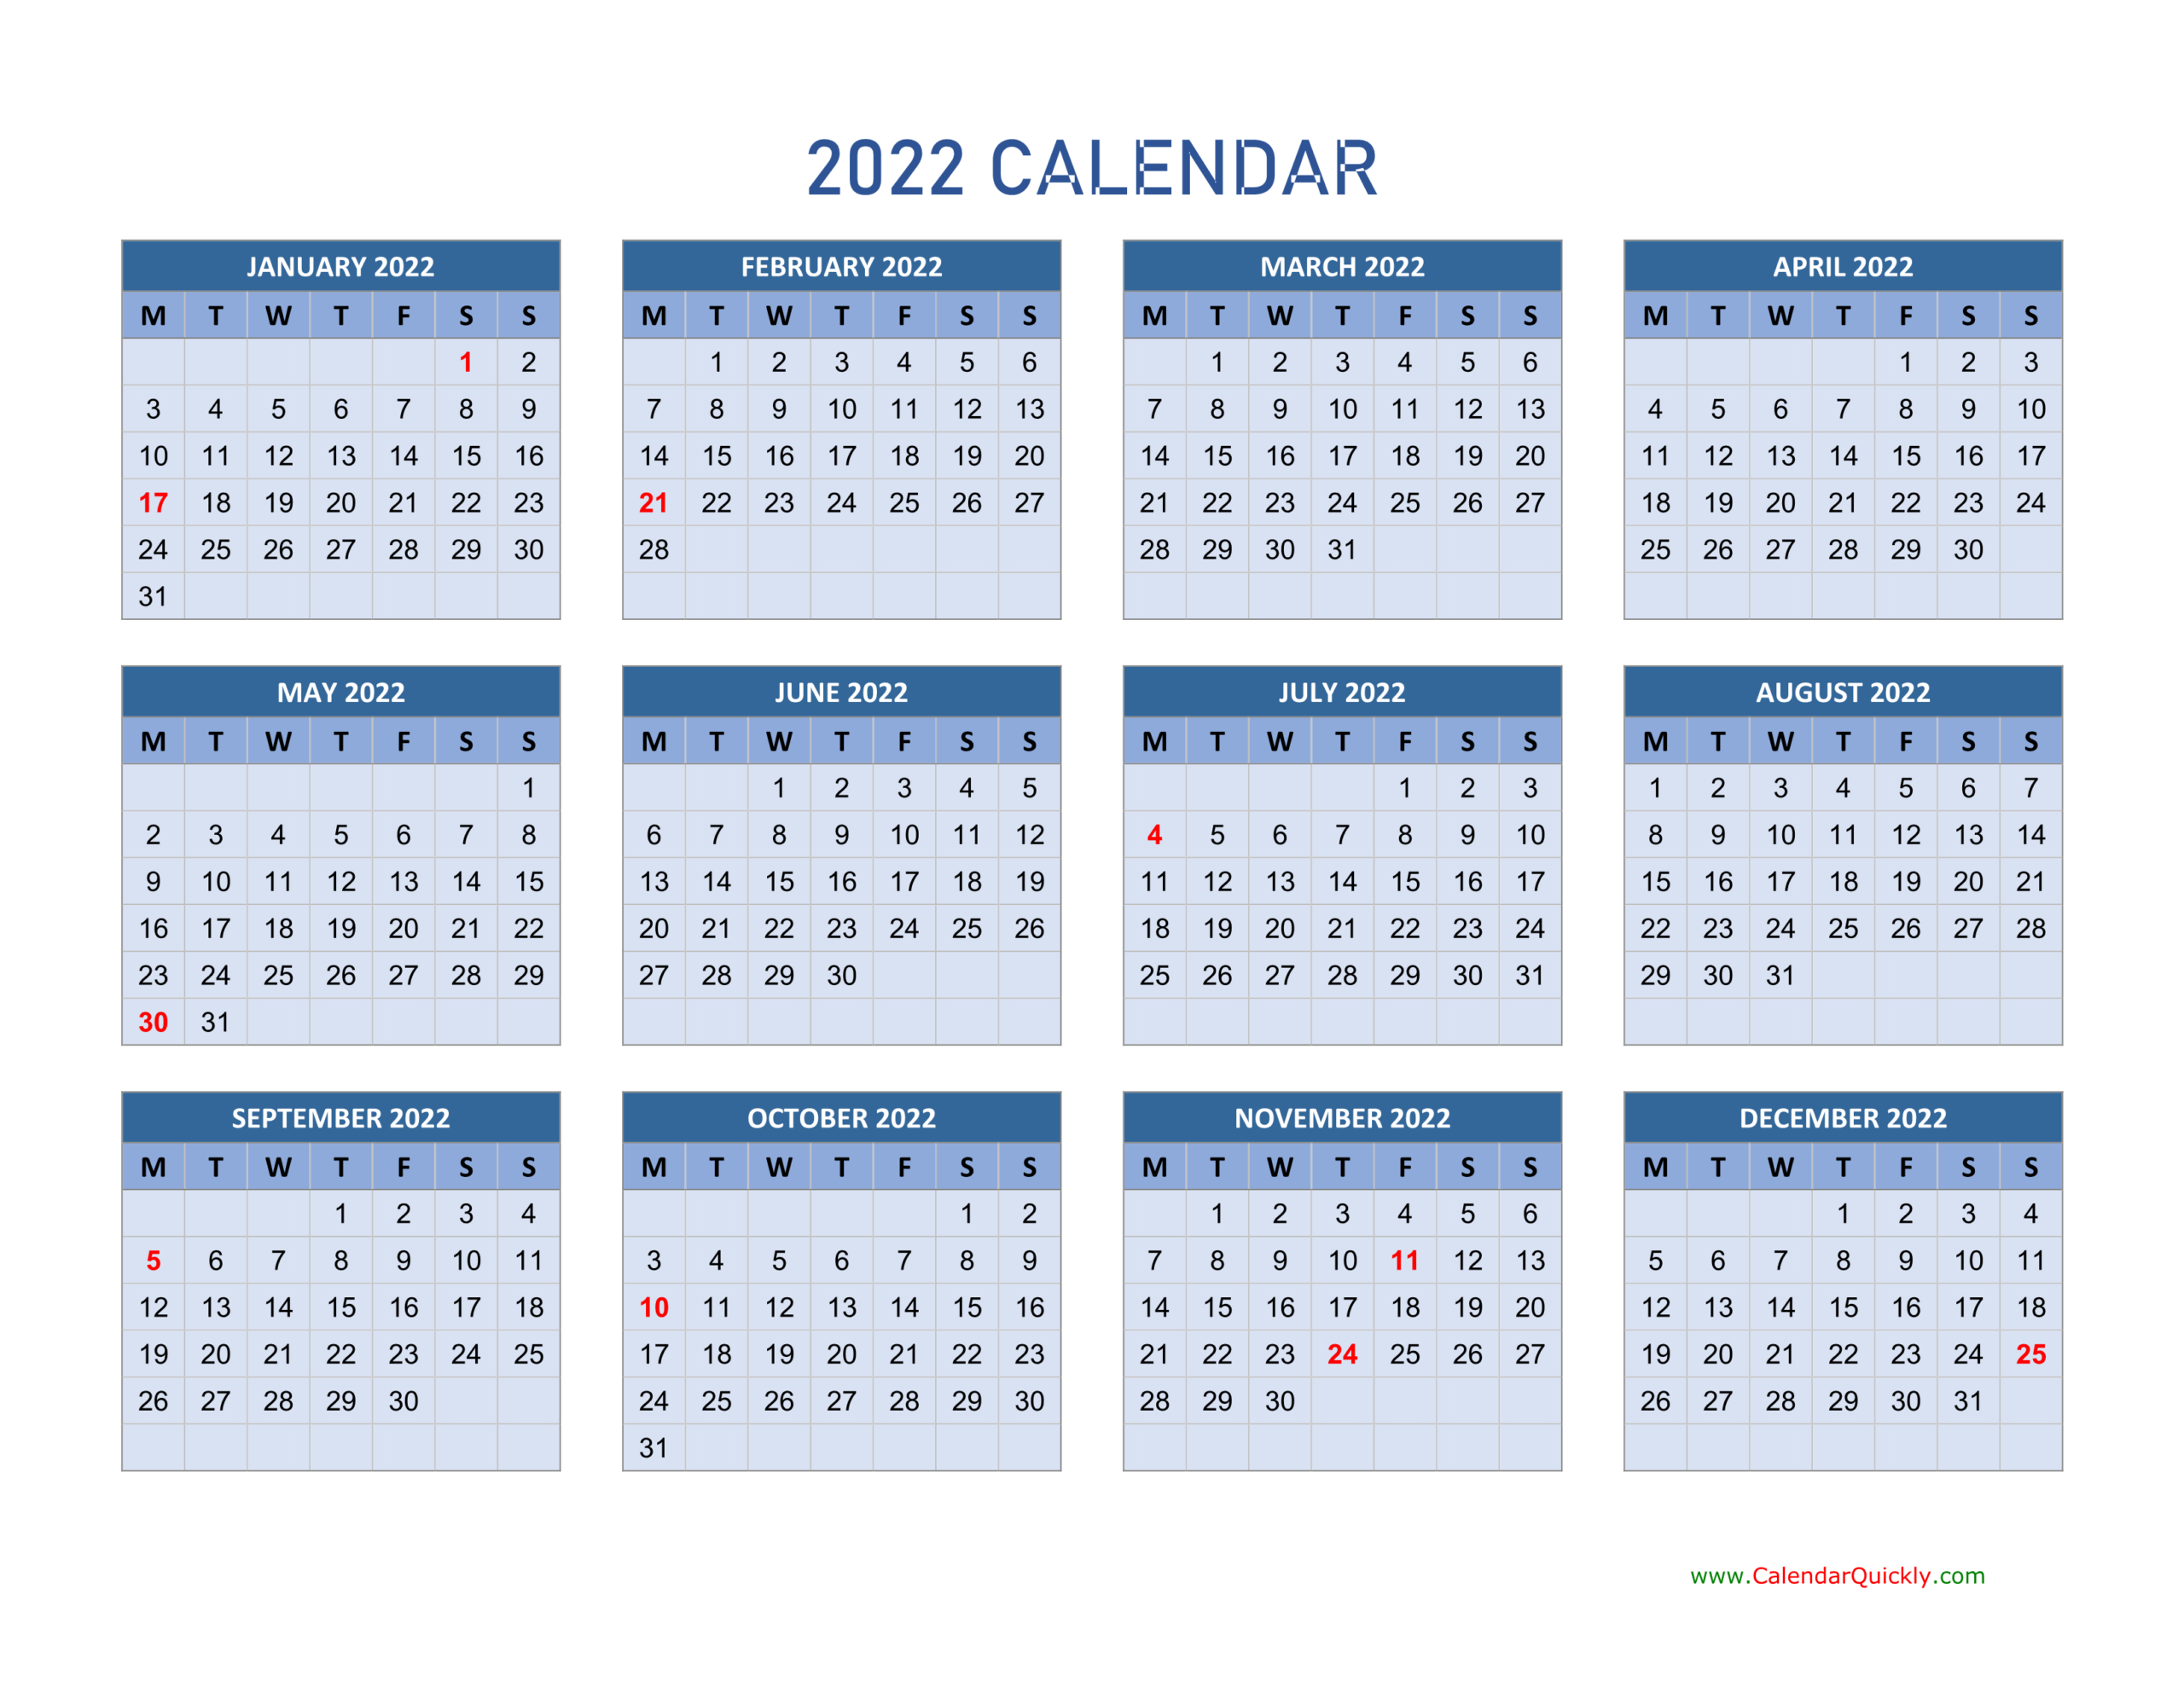 Monday 2022 Calendar Horizontal | Calendar Quickly  Free Printable 2022 Calendar With Holidays